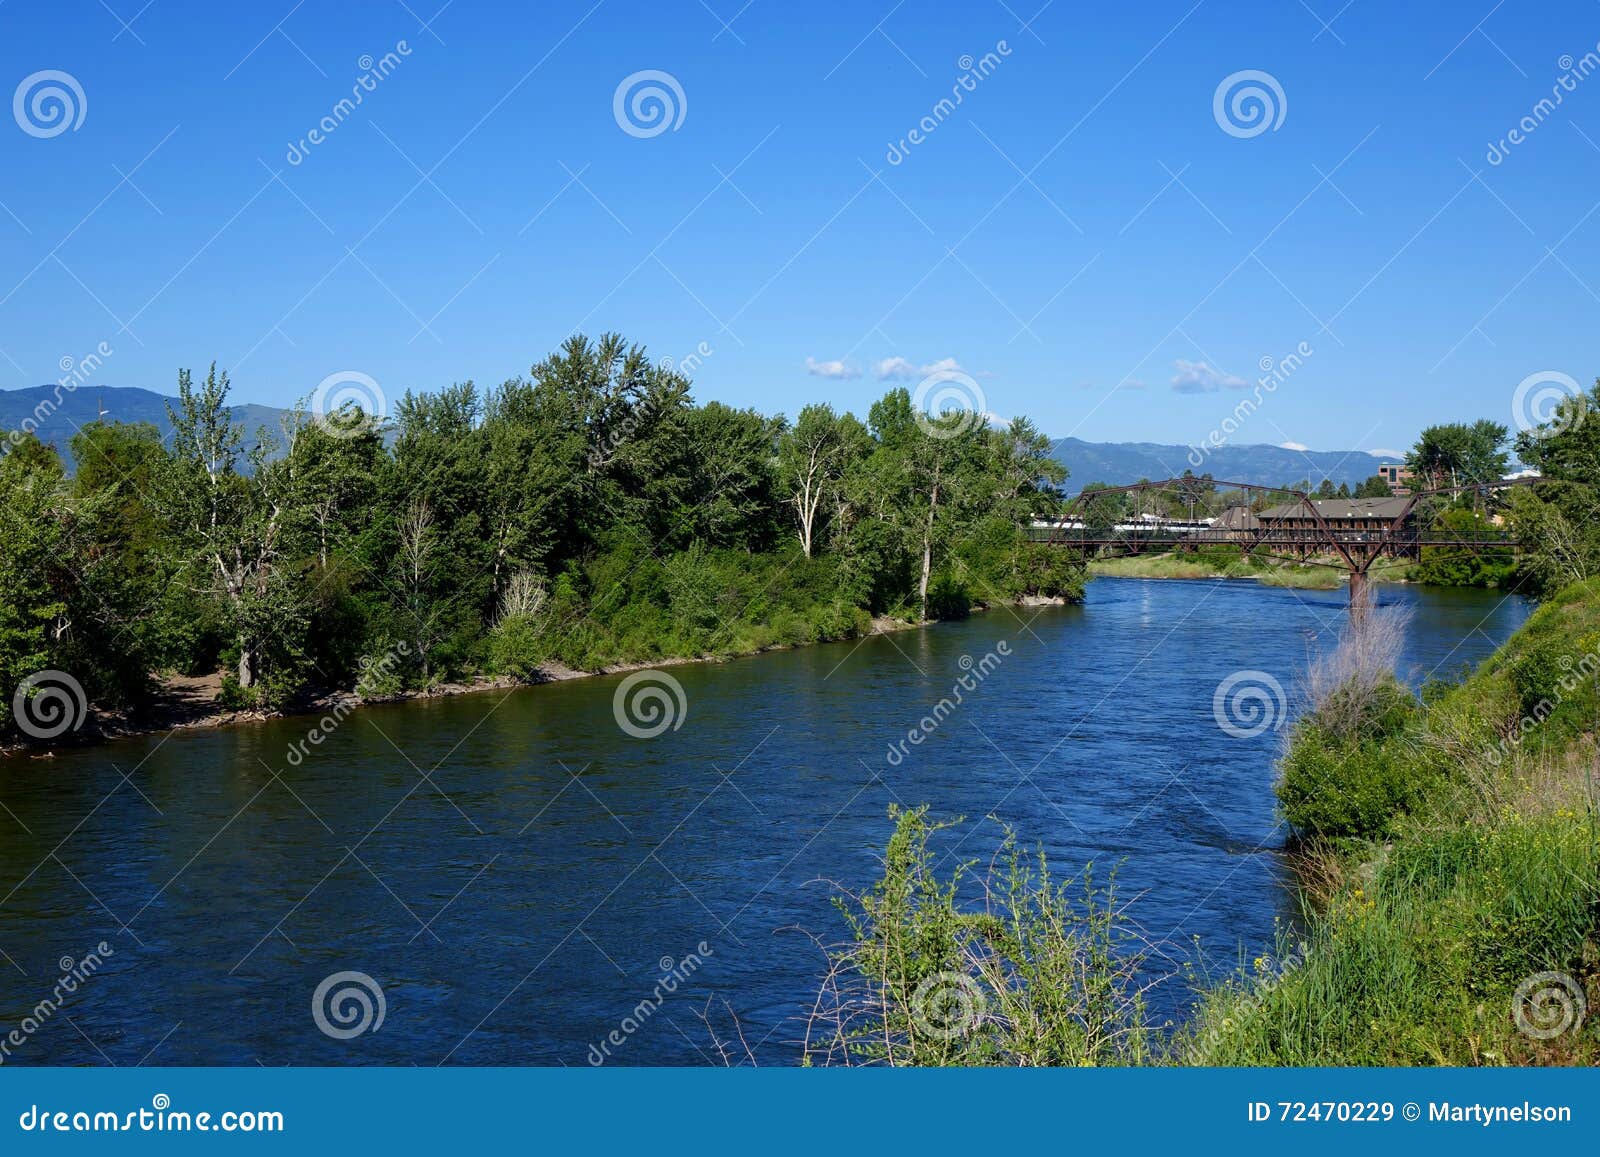 clark fork river - missoula, montana